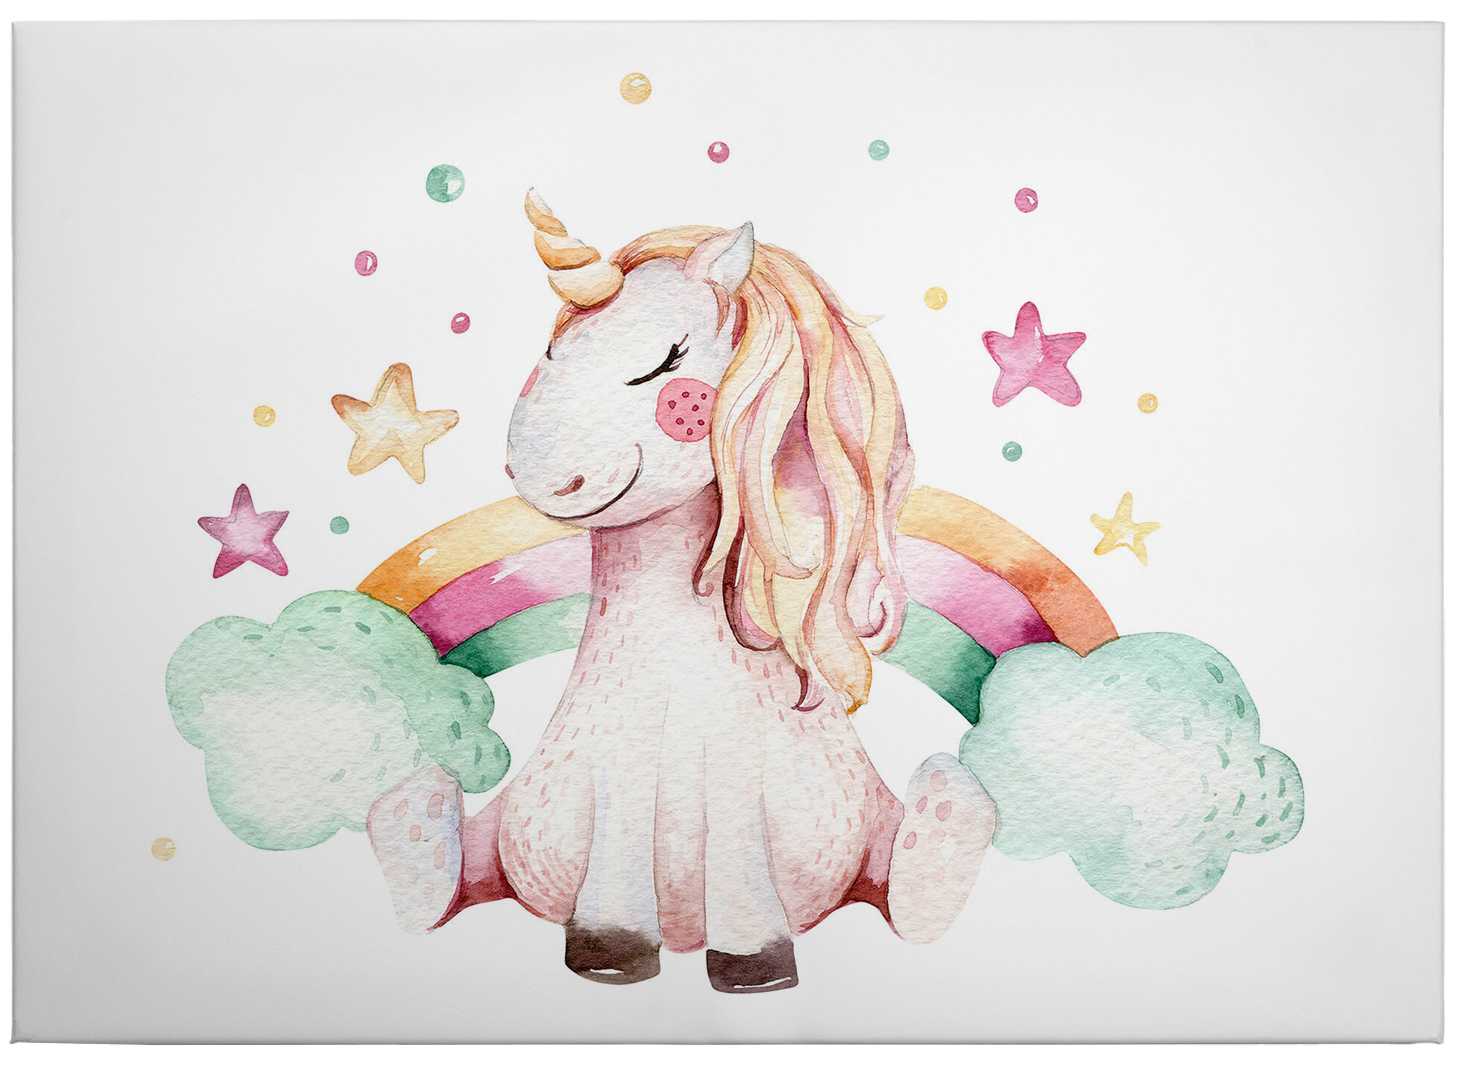             Kids canvas print unicorn and rainbow from Kvilis
        